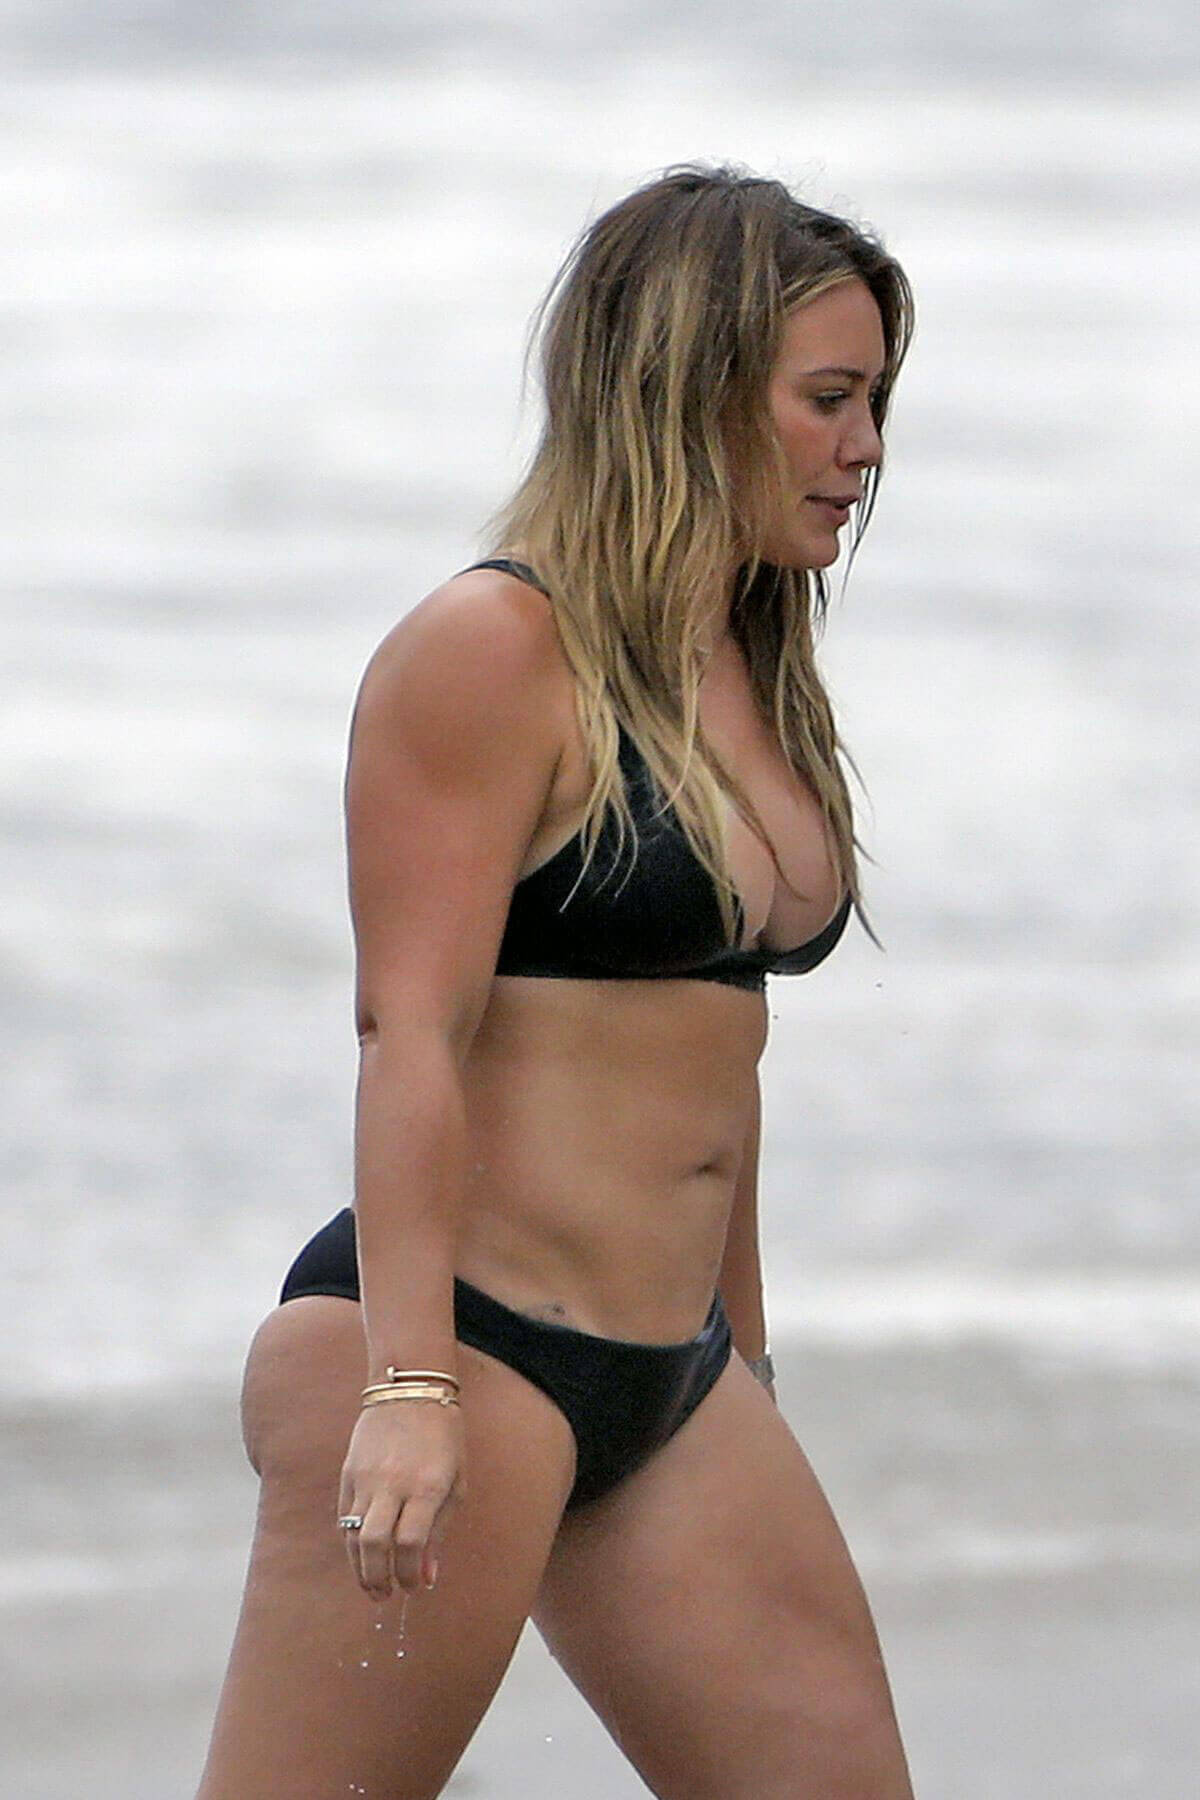 Hilary Duff wears tiny black bikini at a beach in Malibu